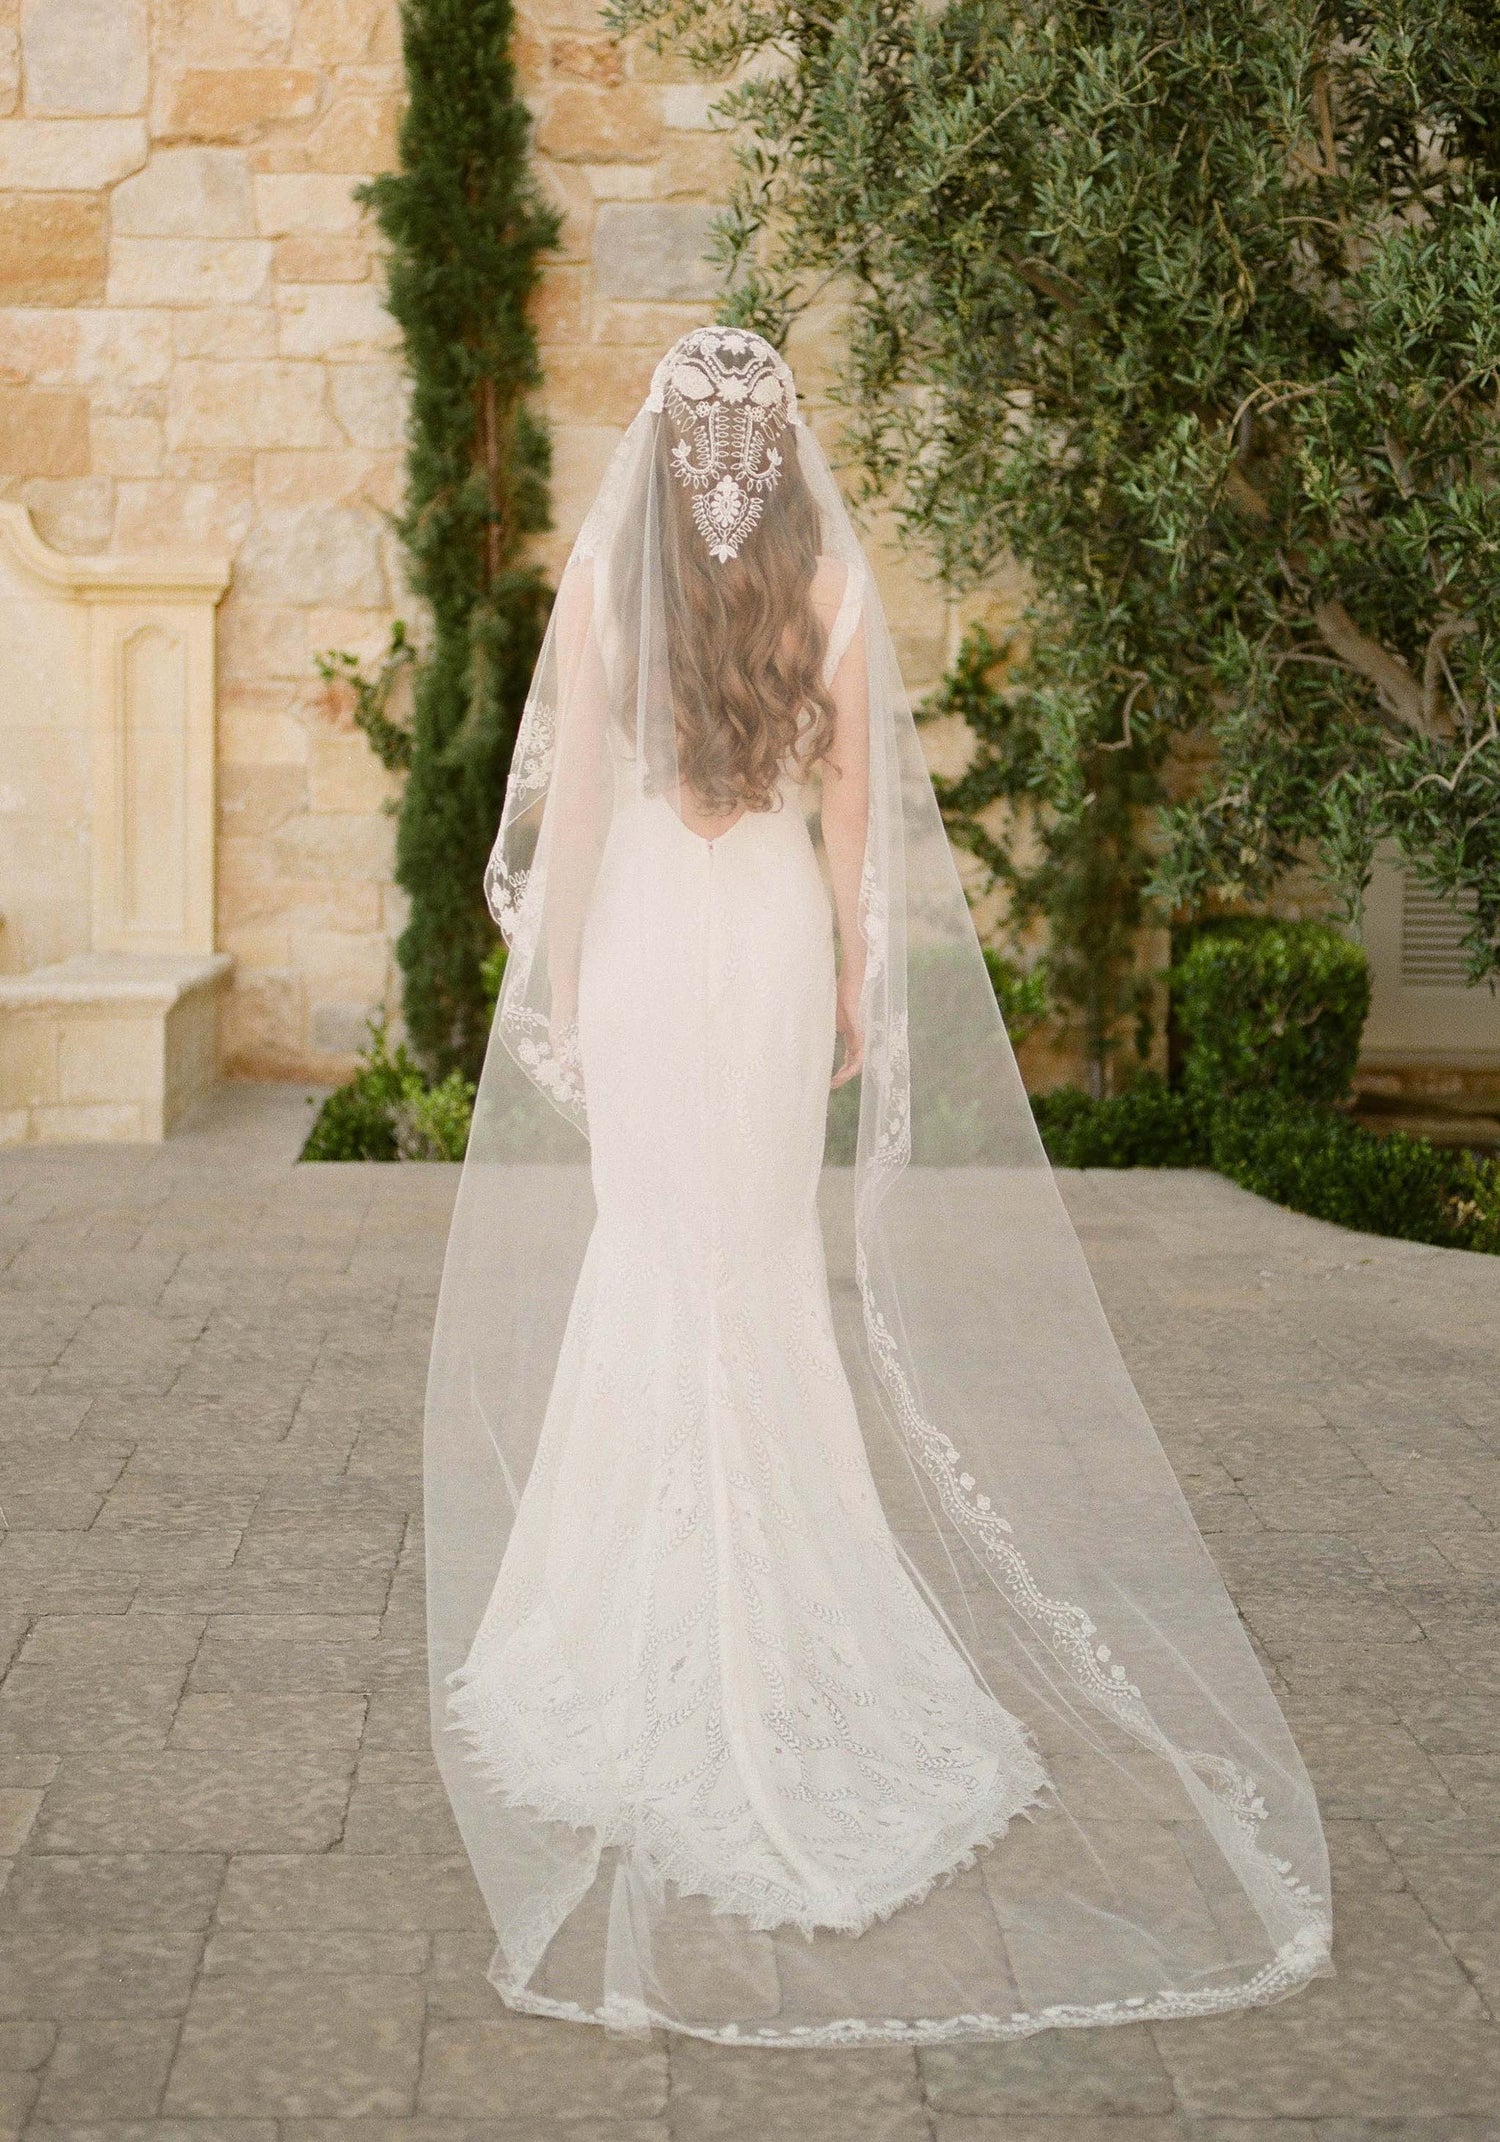 Wedding Veil, Tulle Bridal Veil Wedding Long Veil, Bride Wedding